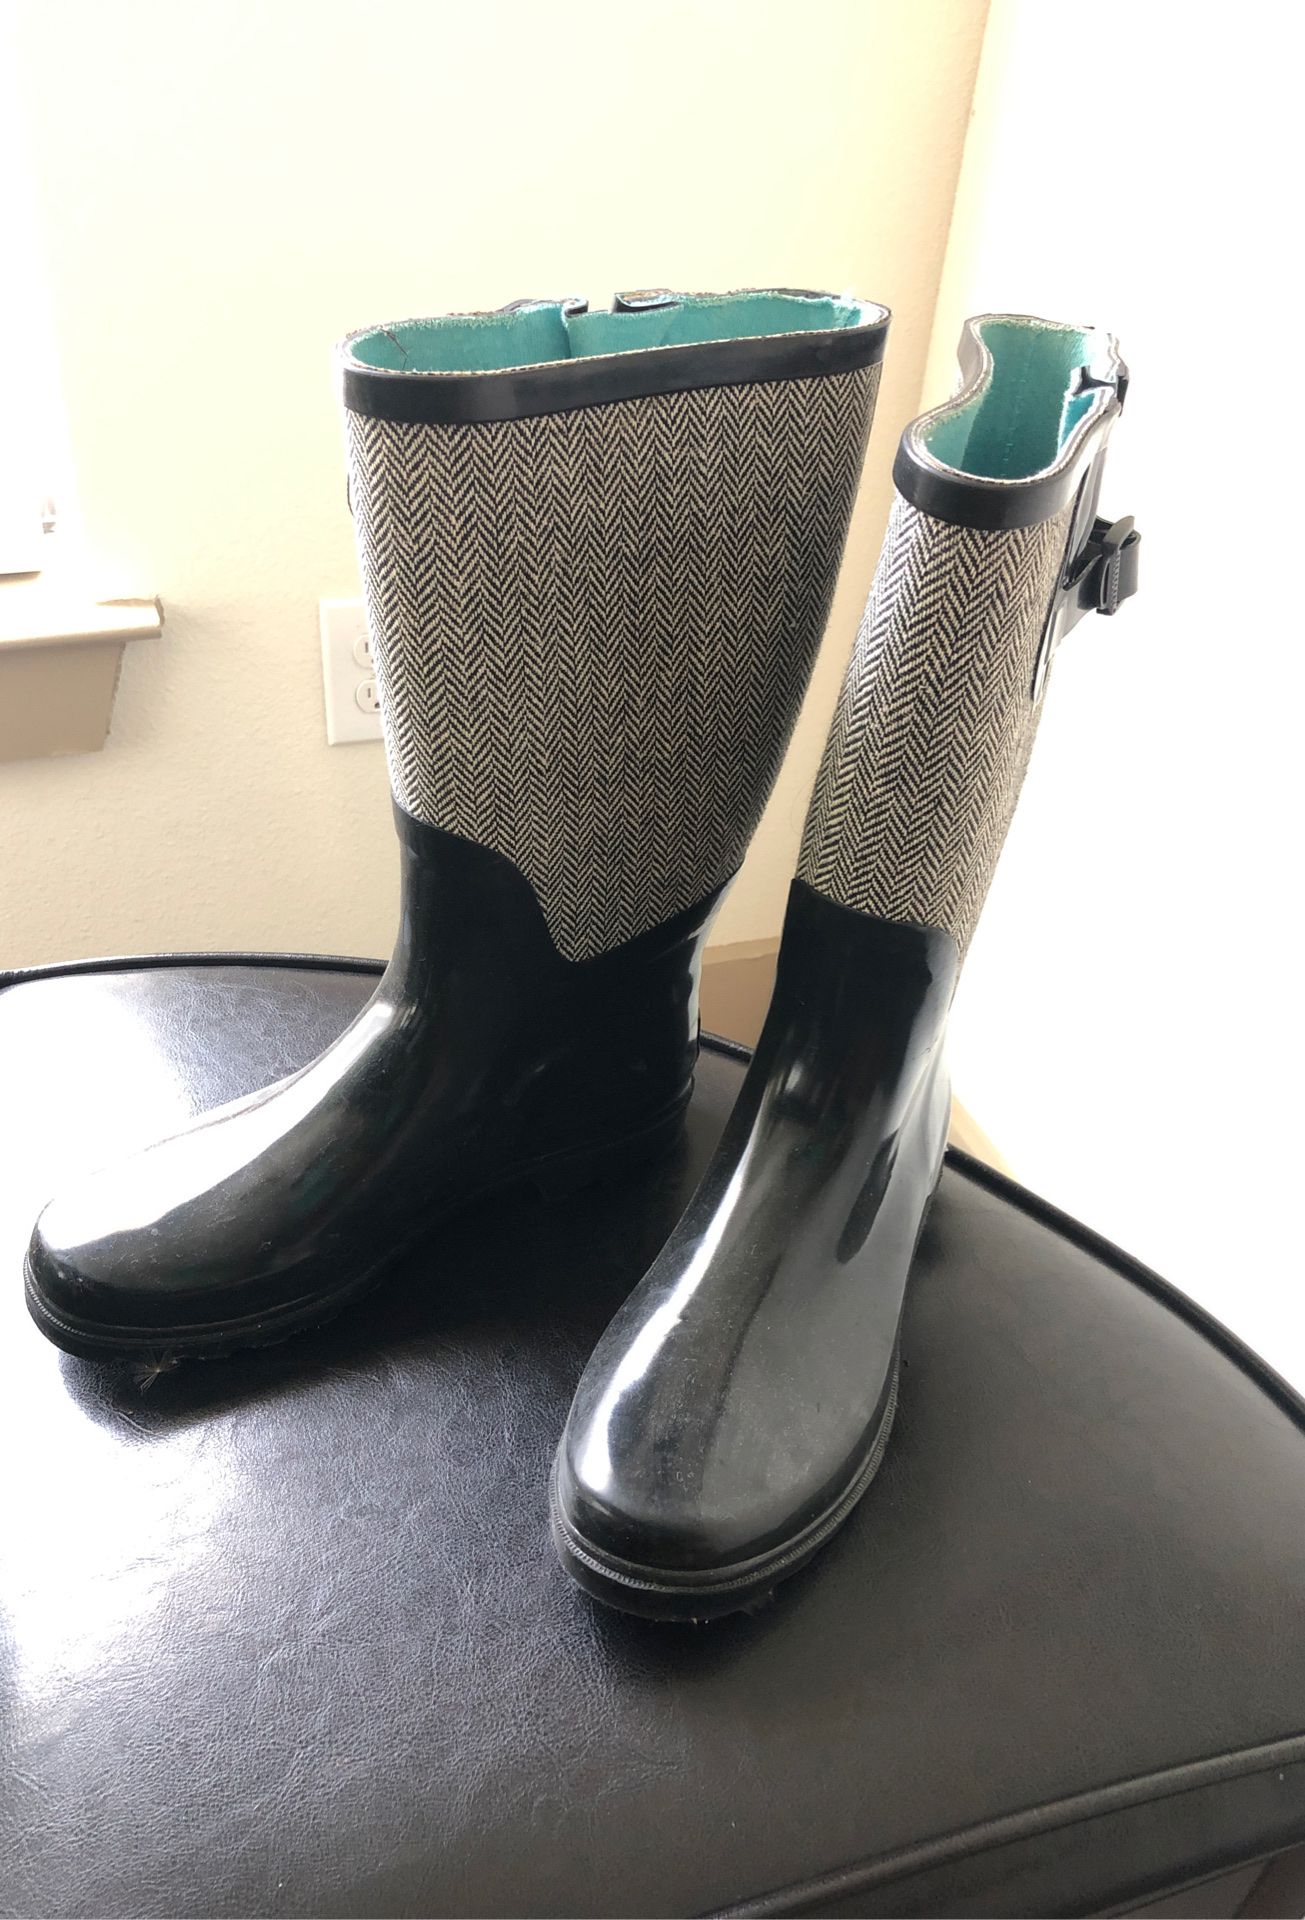 Women’s size 9 rain boots - Black